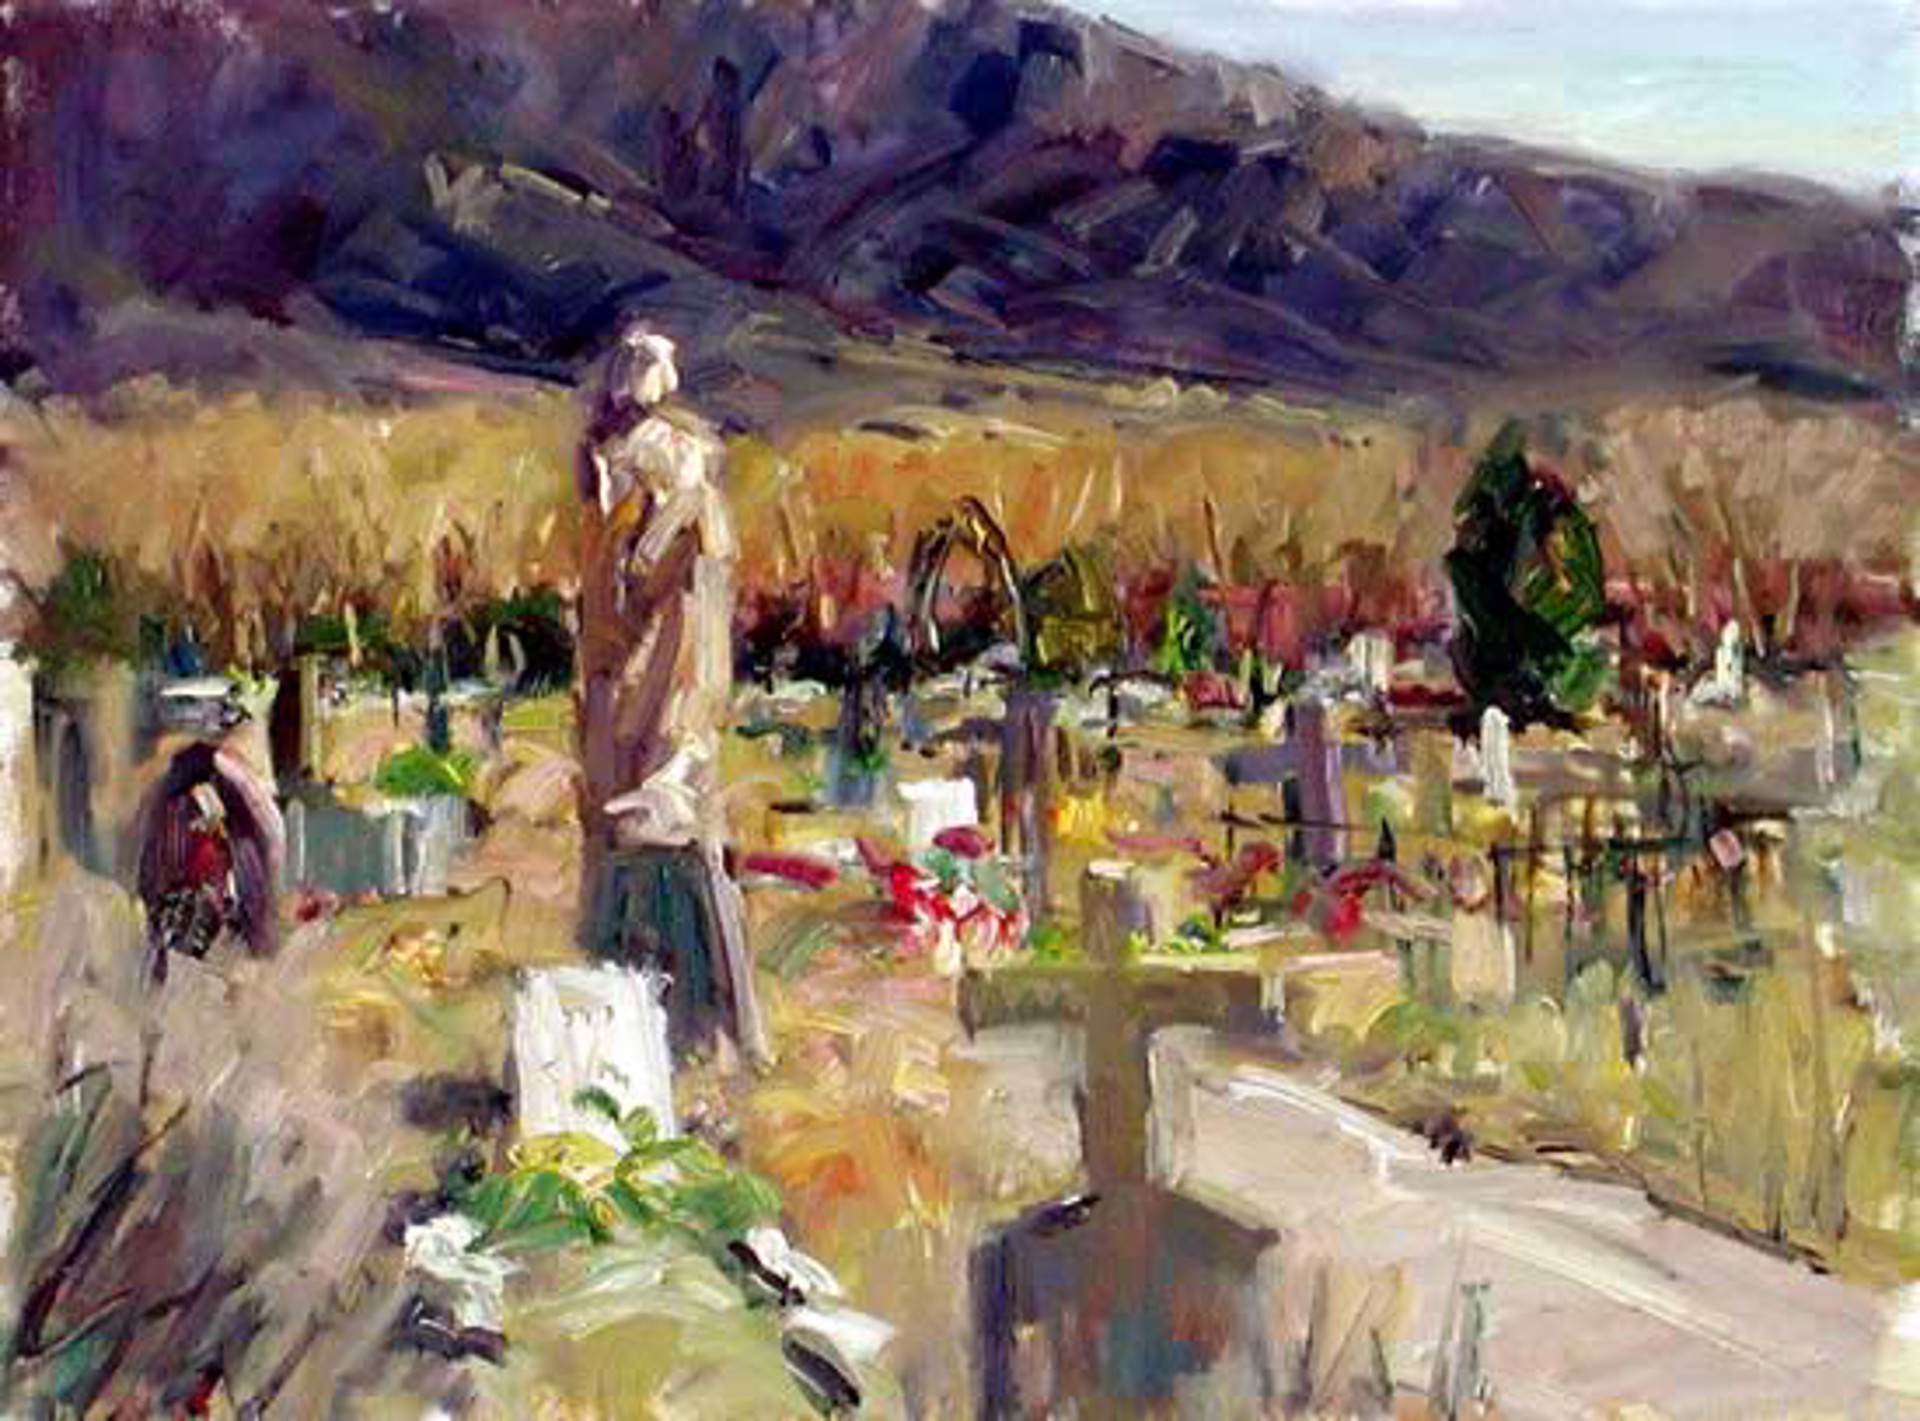 Cemetery Near Corrales, NM by Joe Orr